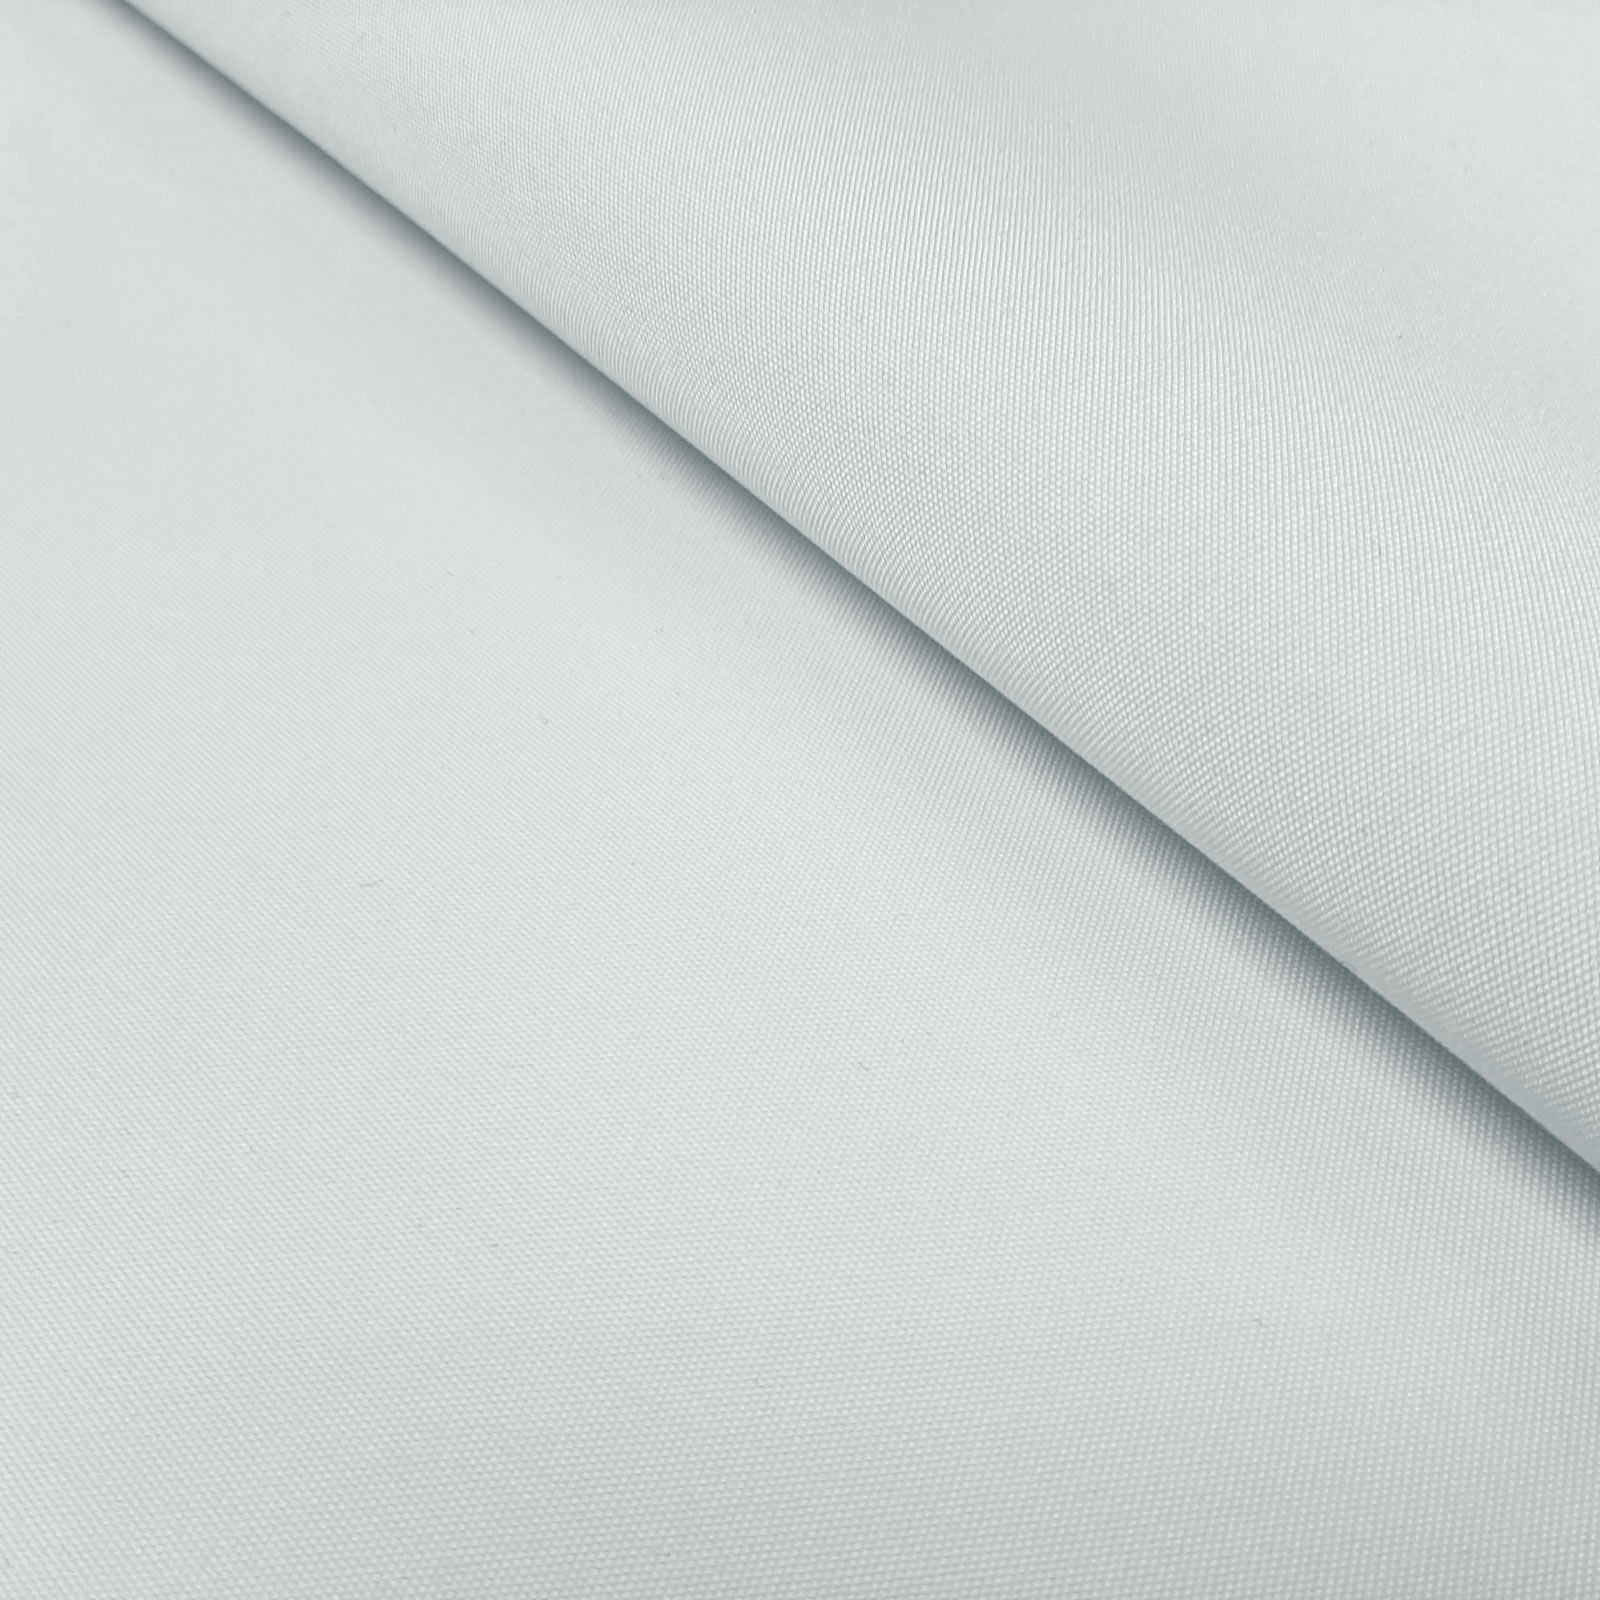 Yuma - Waterproof UV protection fabric - 1B fabric silver